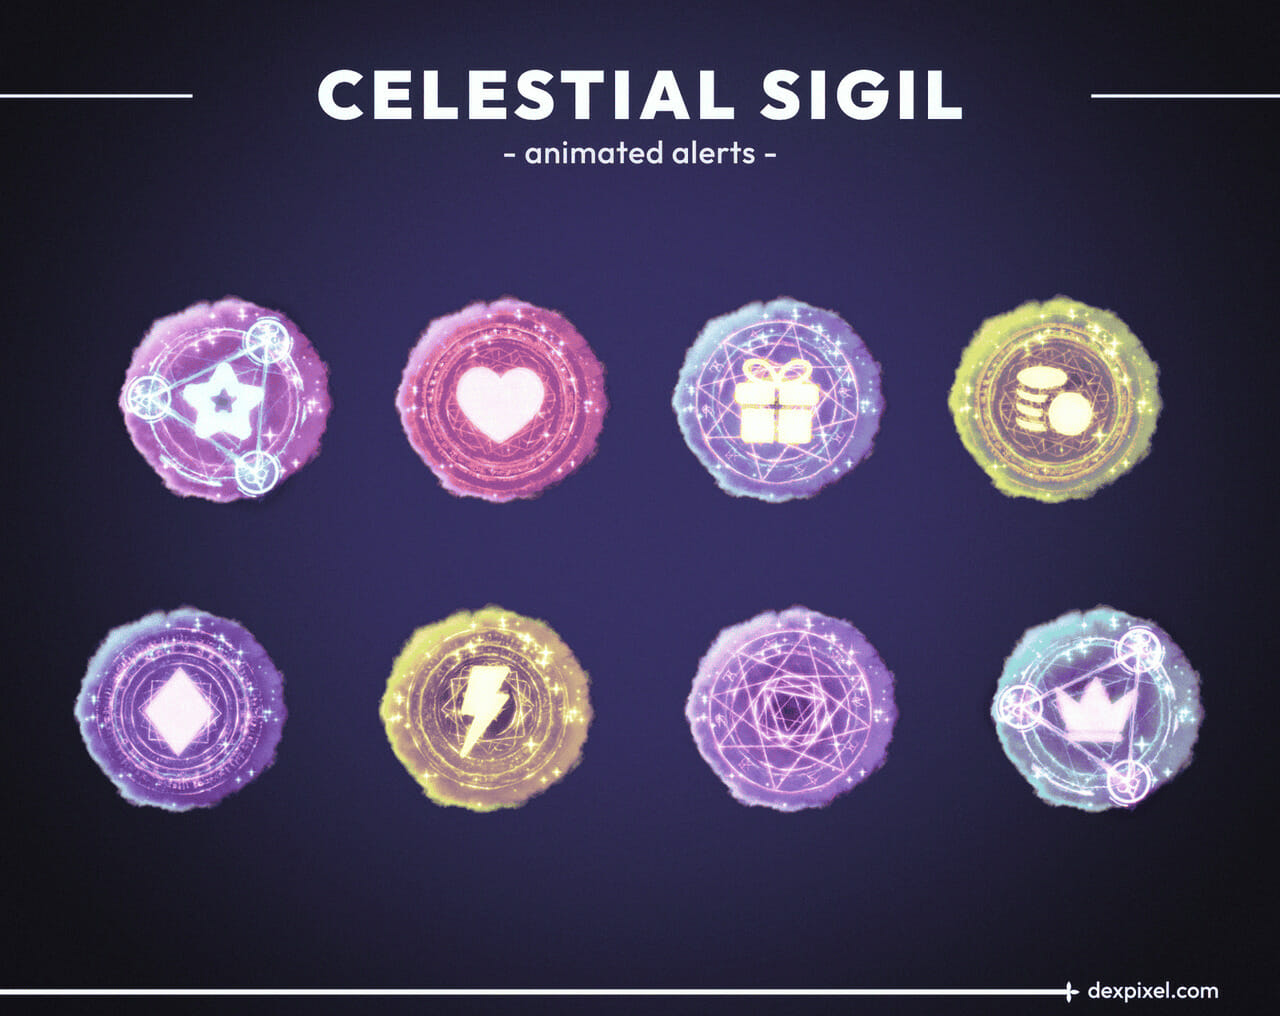 Celestial Sigil Animated Stream Alerts 6